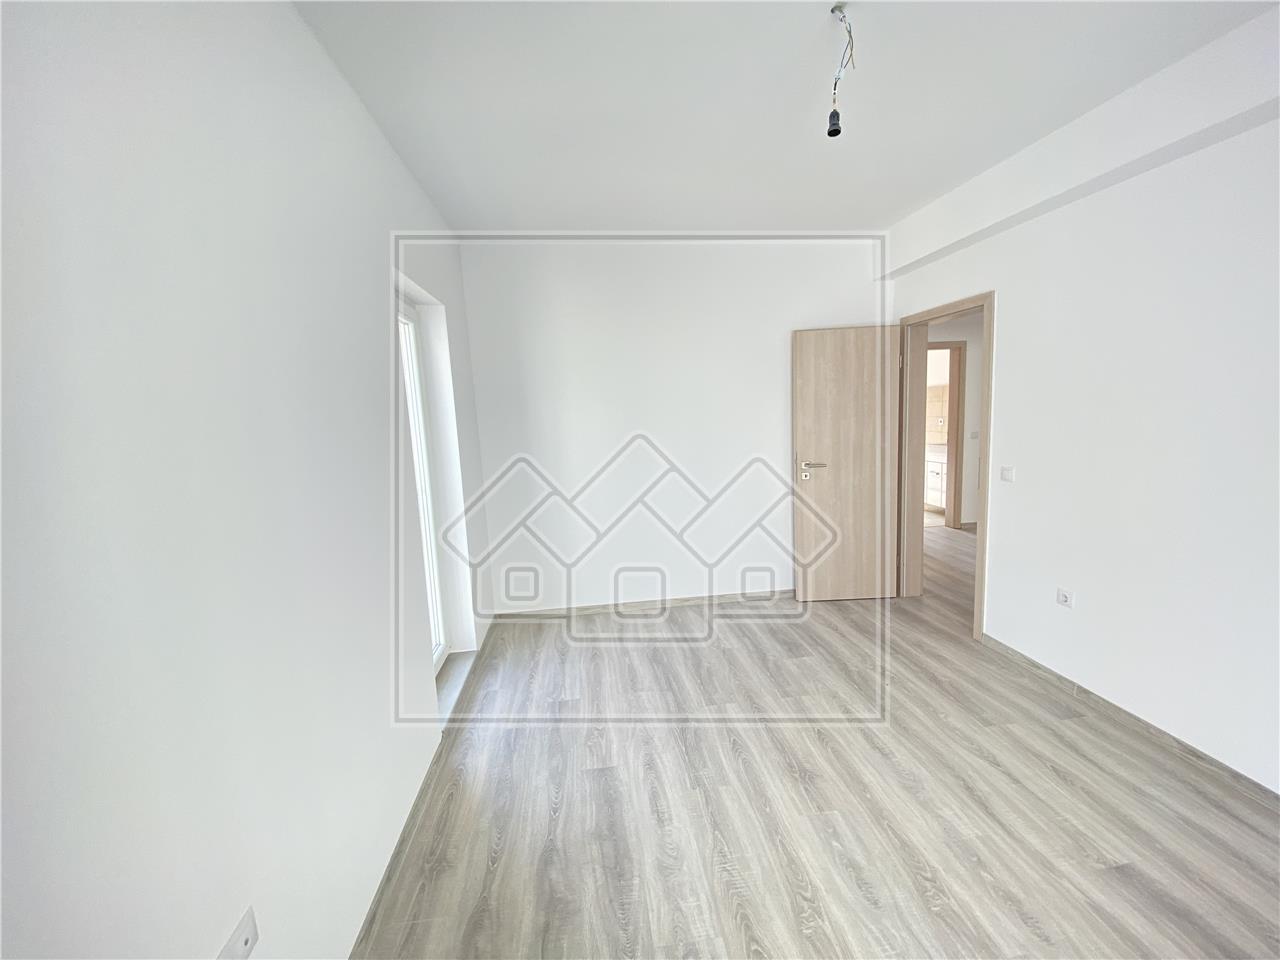 Apartament de vanzare in Sibiu - 3 camere, intabulat, finisat la cheie